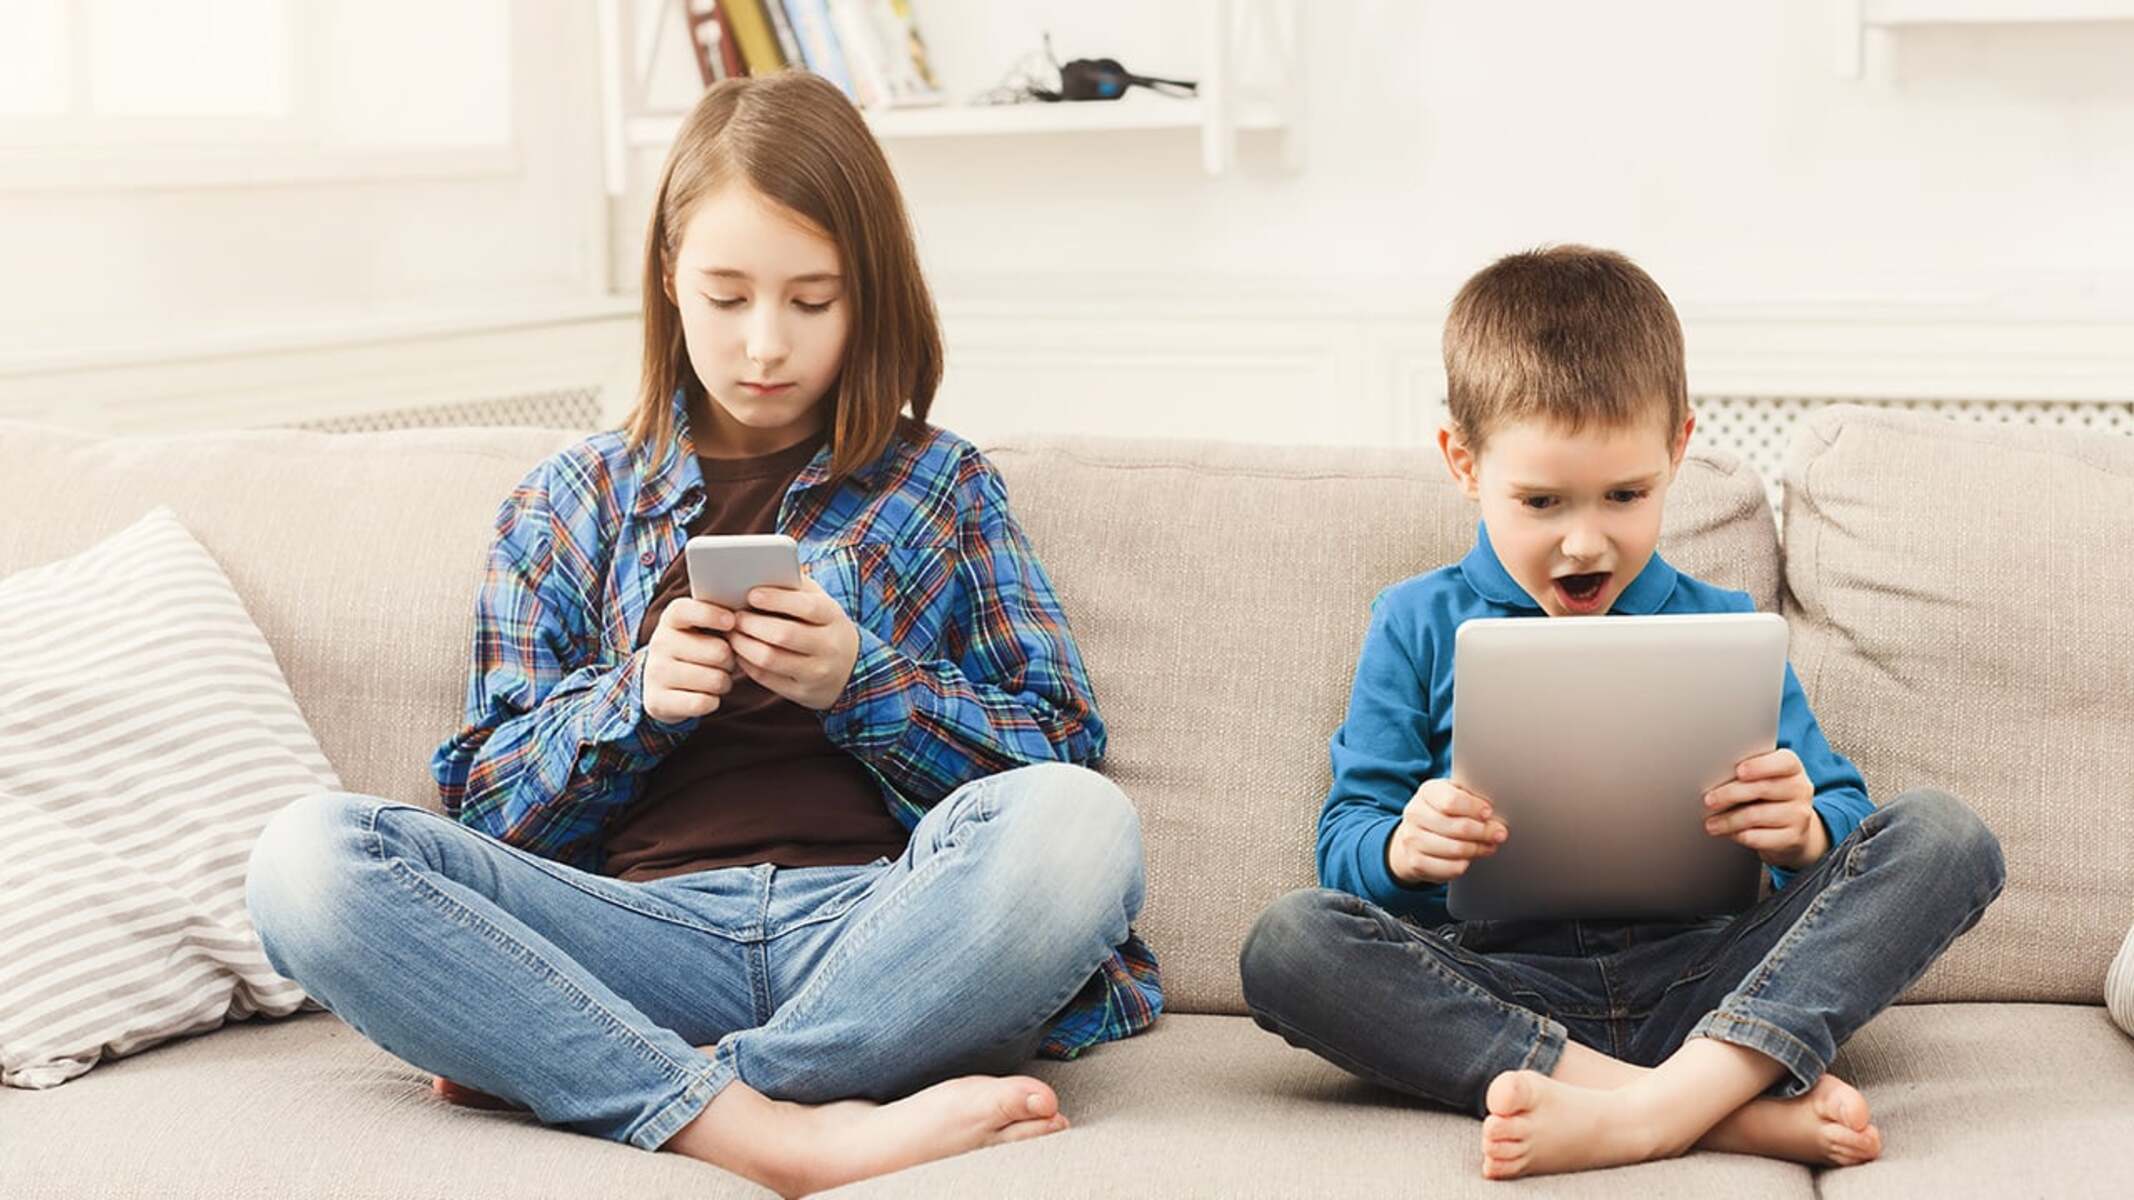 Parental Controls: Disabling Hotspot On Child’s Phone